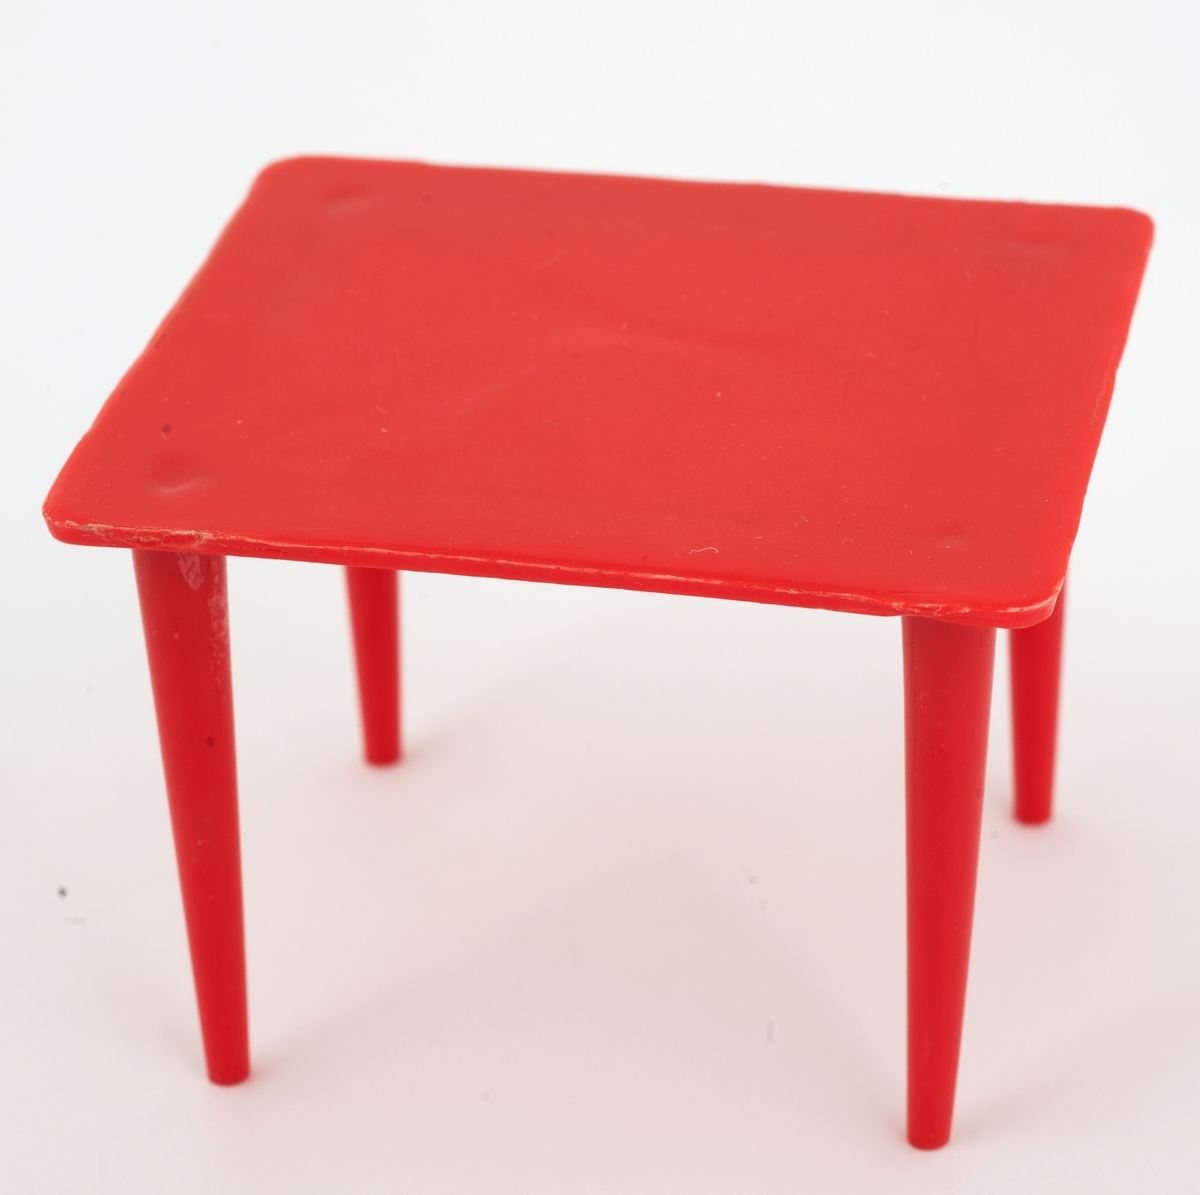 Spisebord i rød plast til dukkehus.